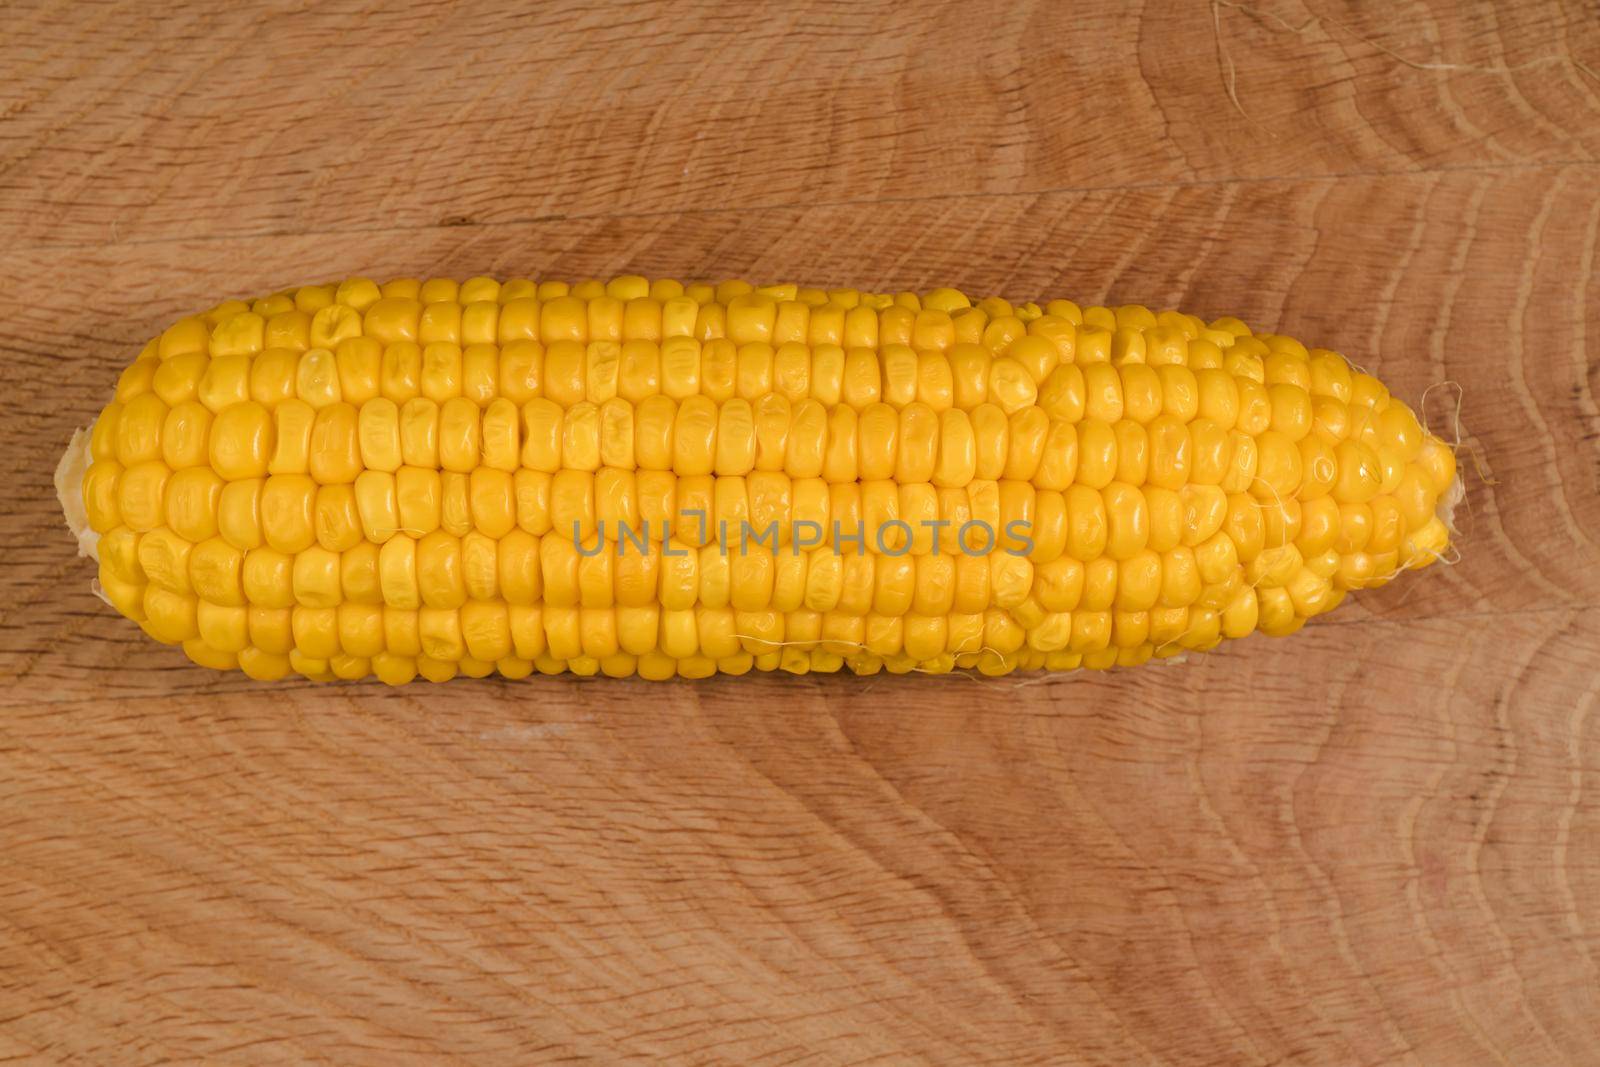 Ripe corn in a roach peeled from husk on a wooden board